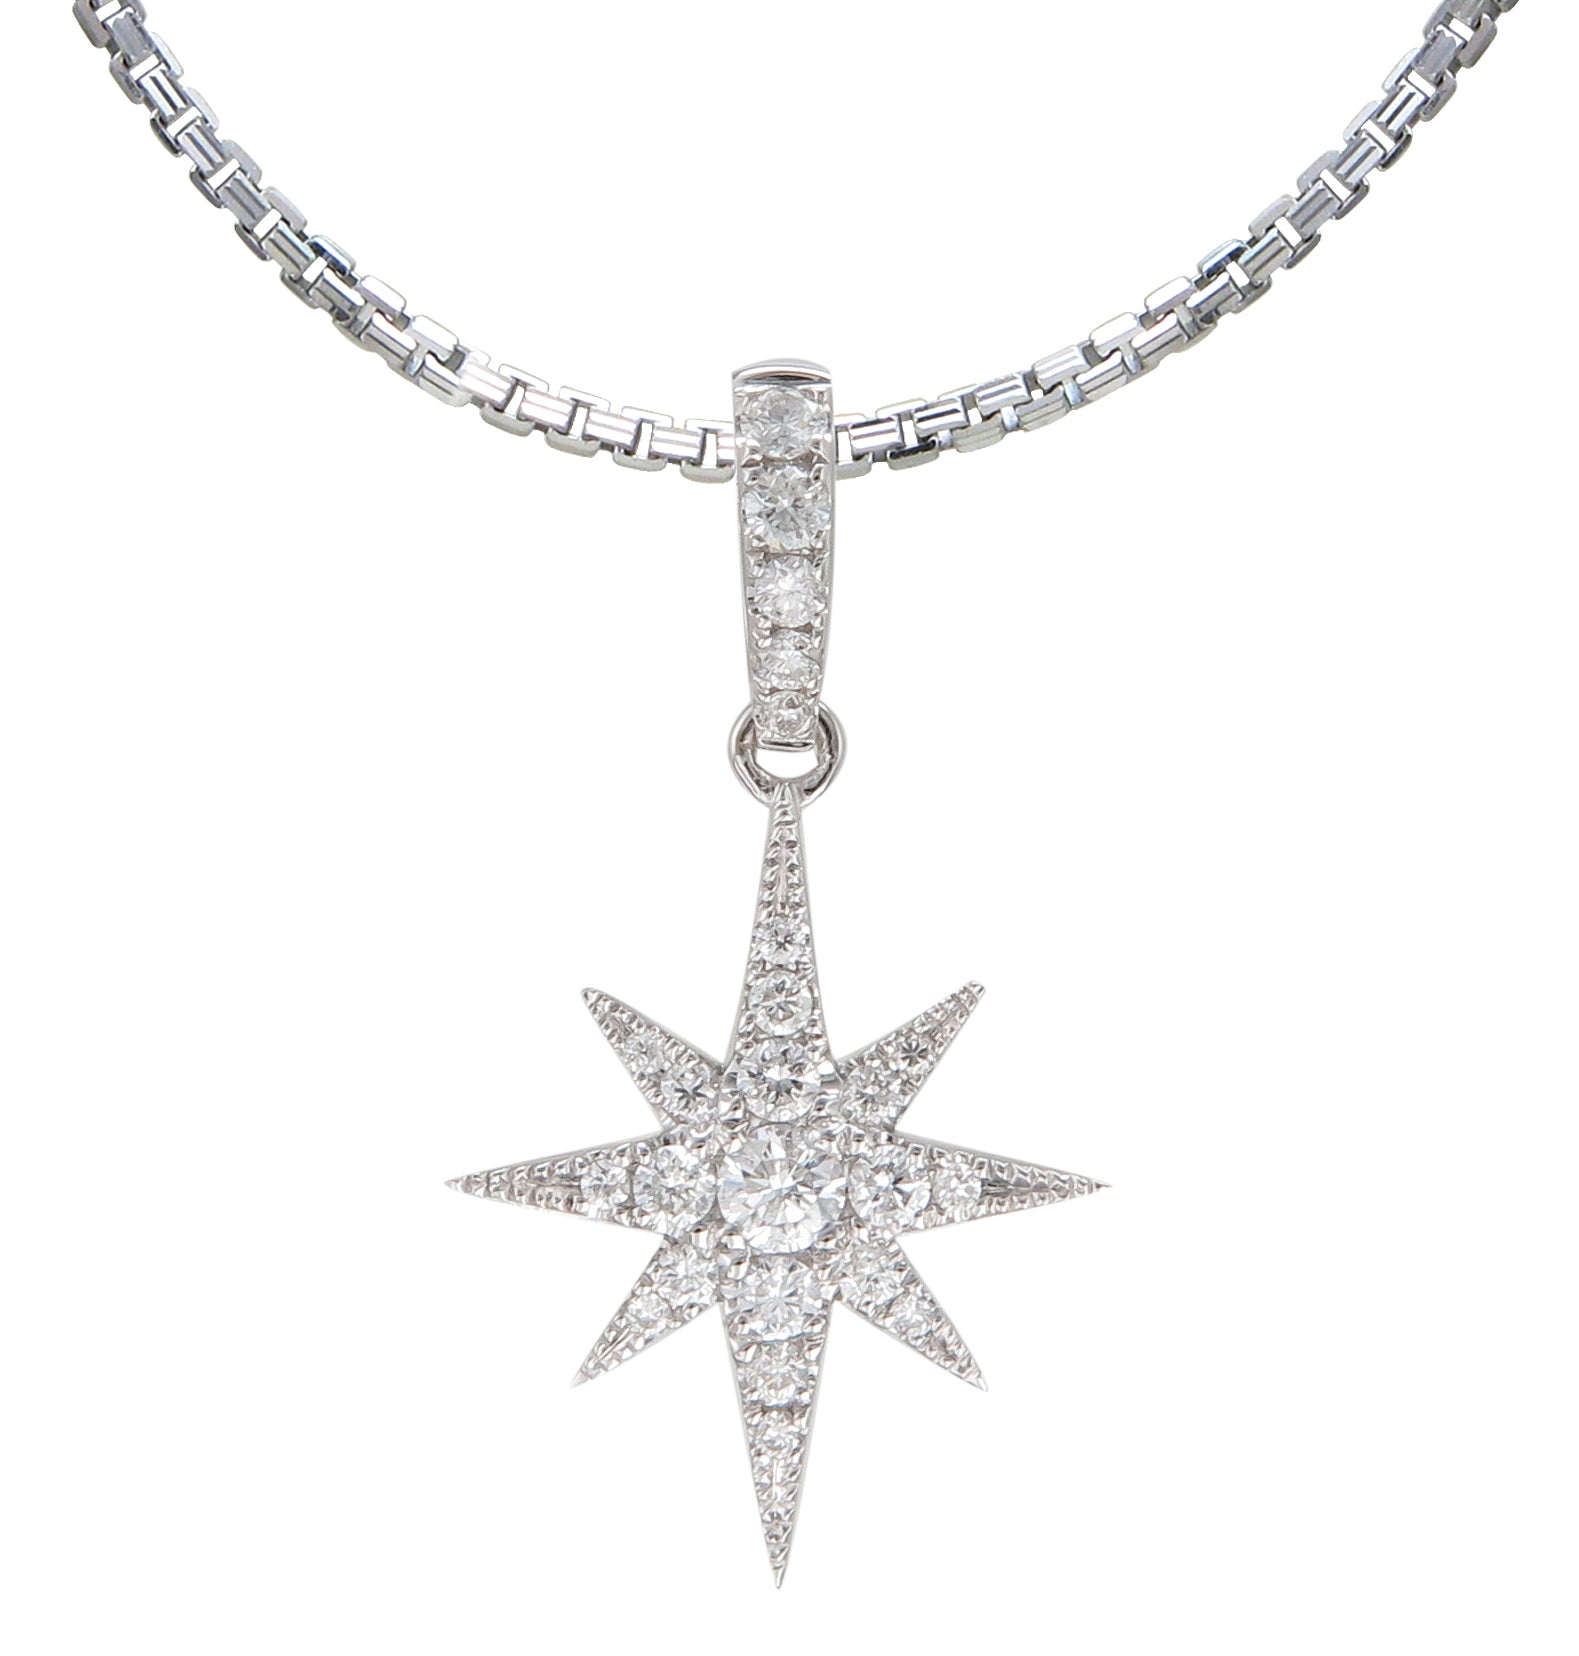 Northern Star Diamond Pendant Chain Necklace